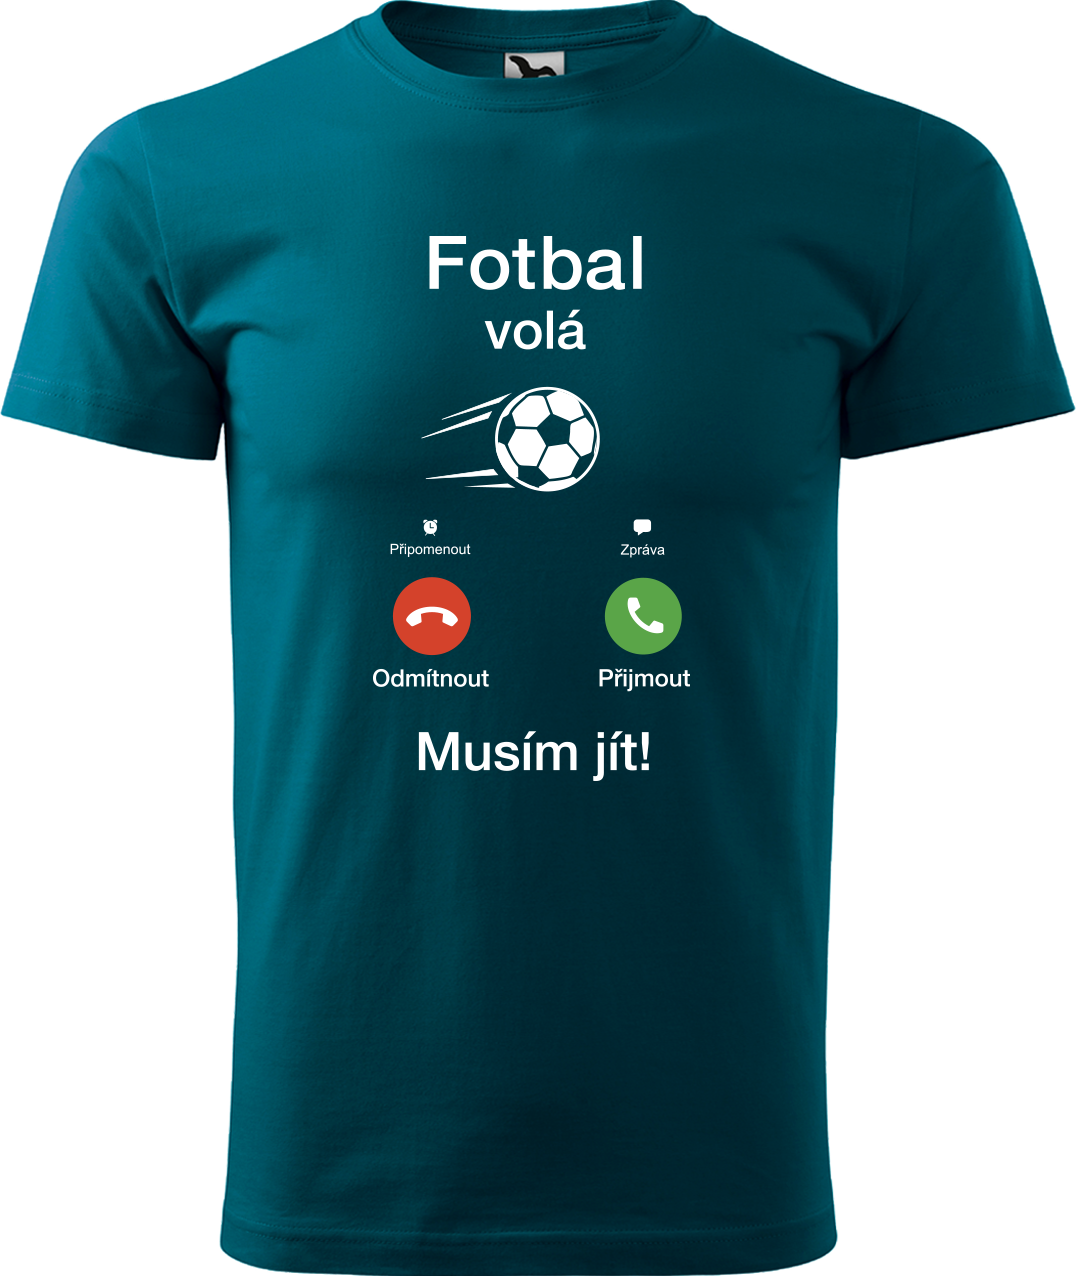 Tričko pro fotbalistu - Fotbal volá Velikost: L, Barva: Petrolejová (93)